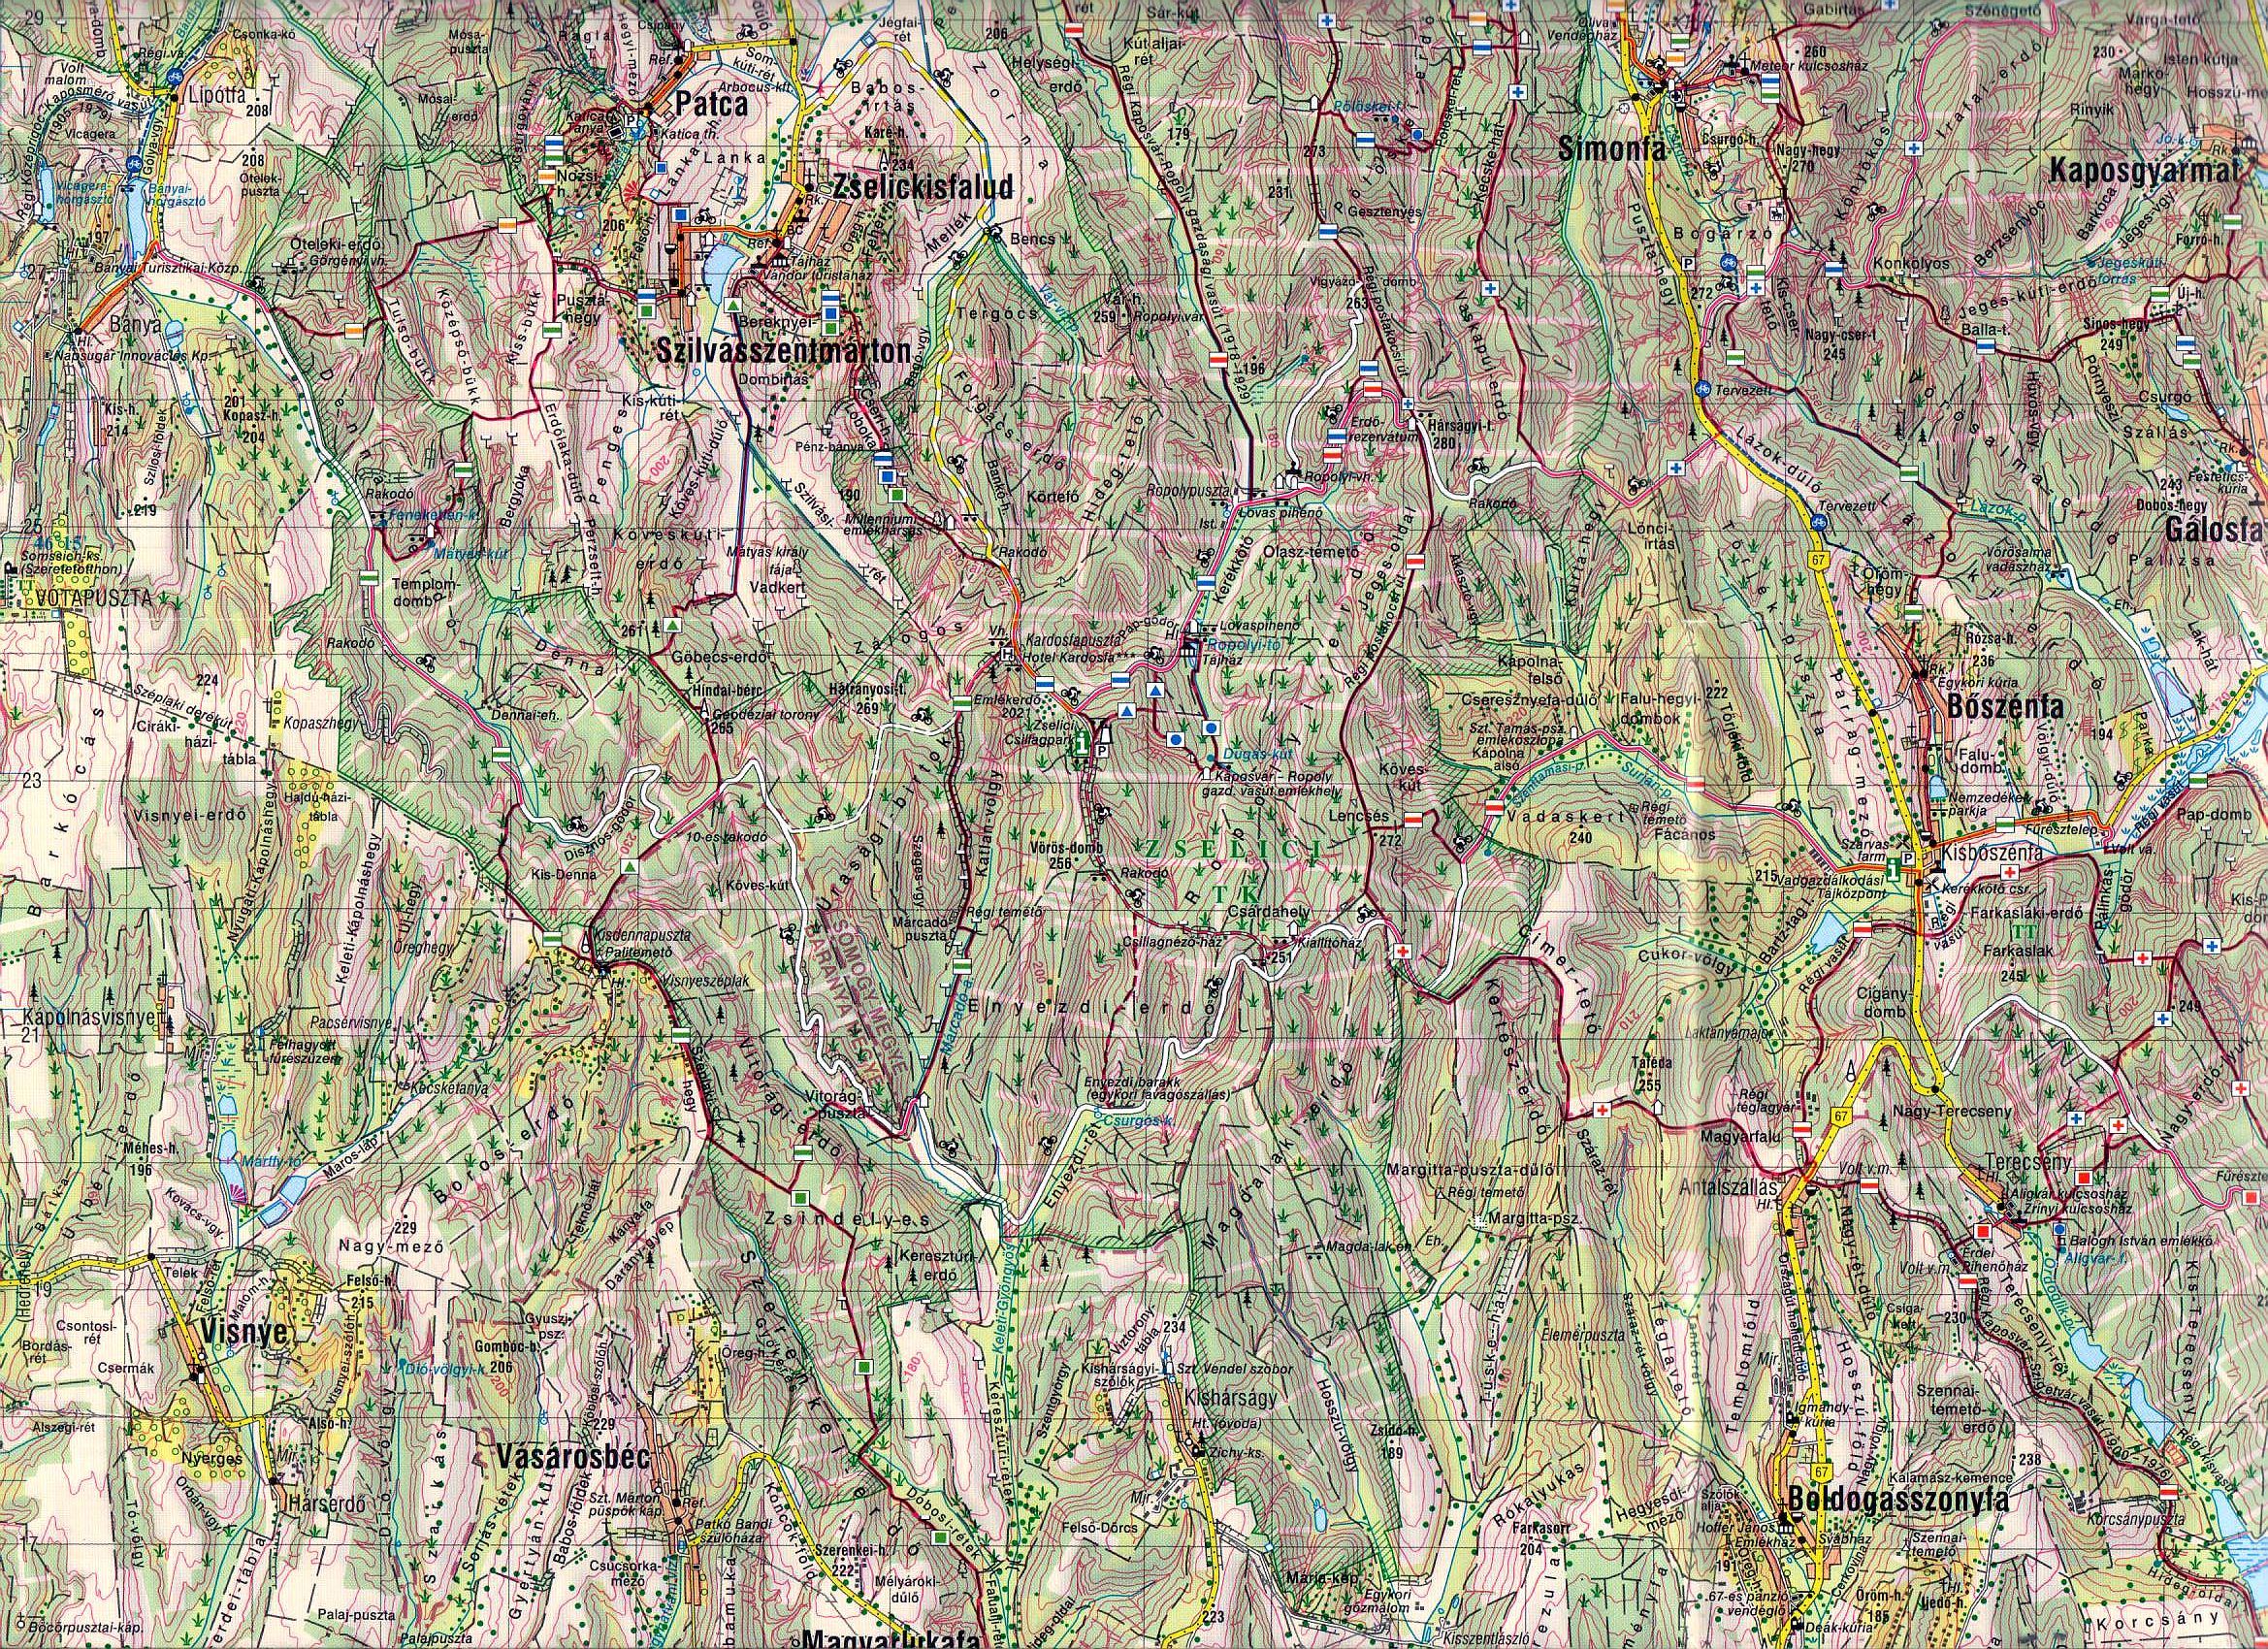 Zselic 1:60.000 sample map